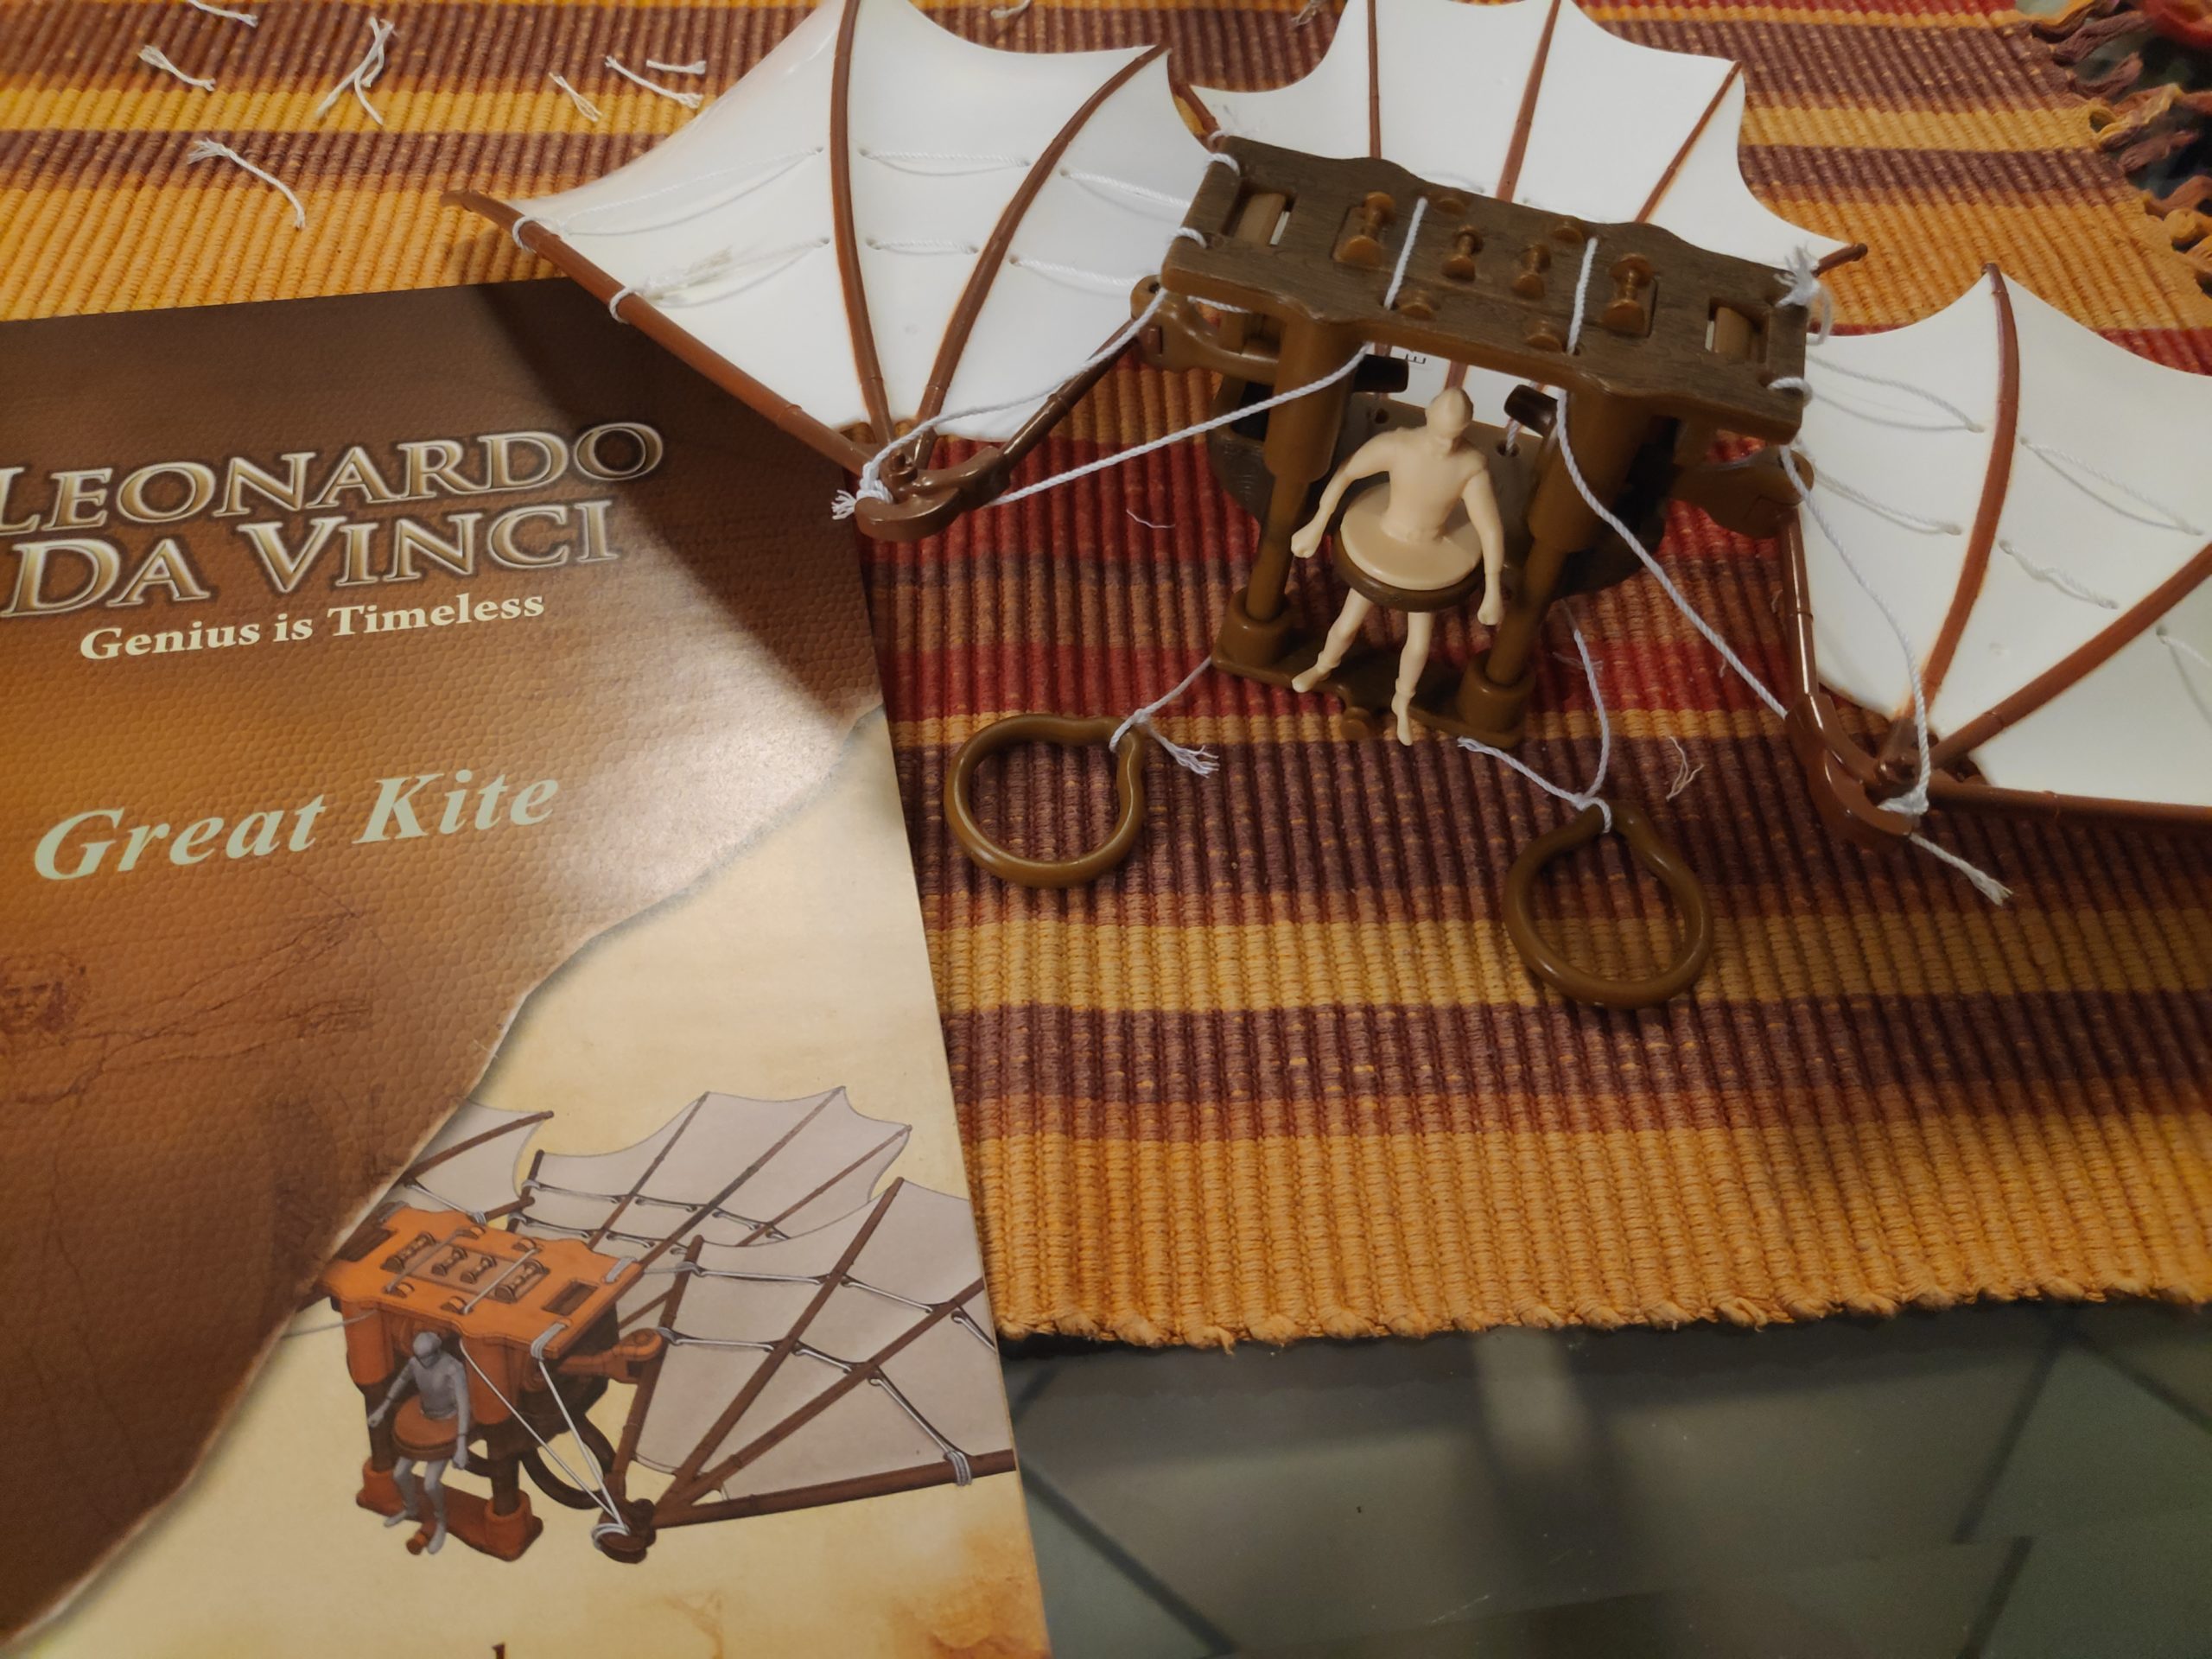 NEU Leonardo da Vinci Flugdrachen Modell Bausatz